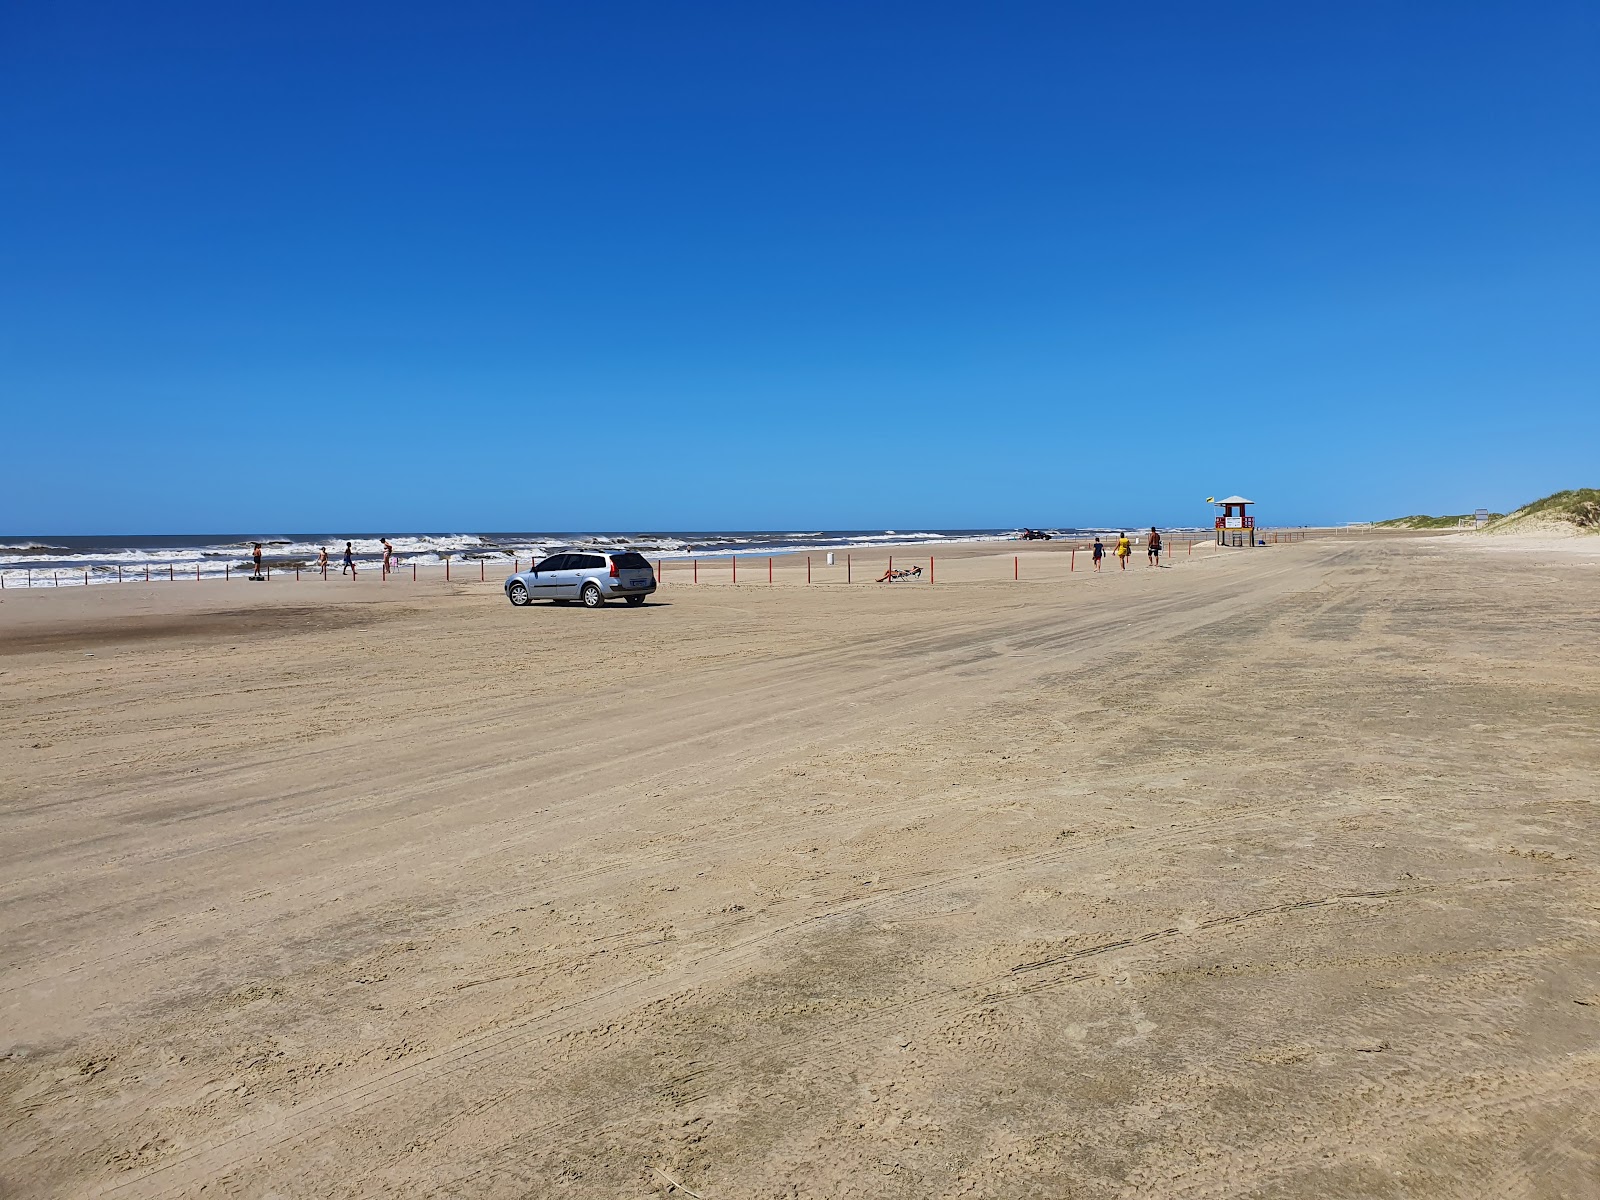 Photo of Praia do Farol da Solidao with long straight shore